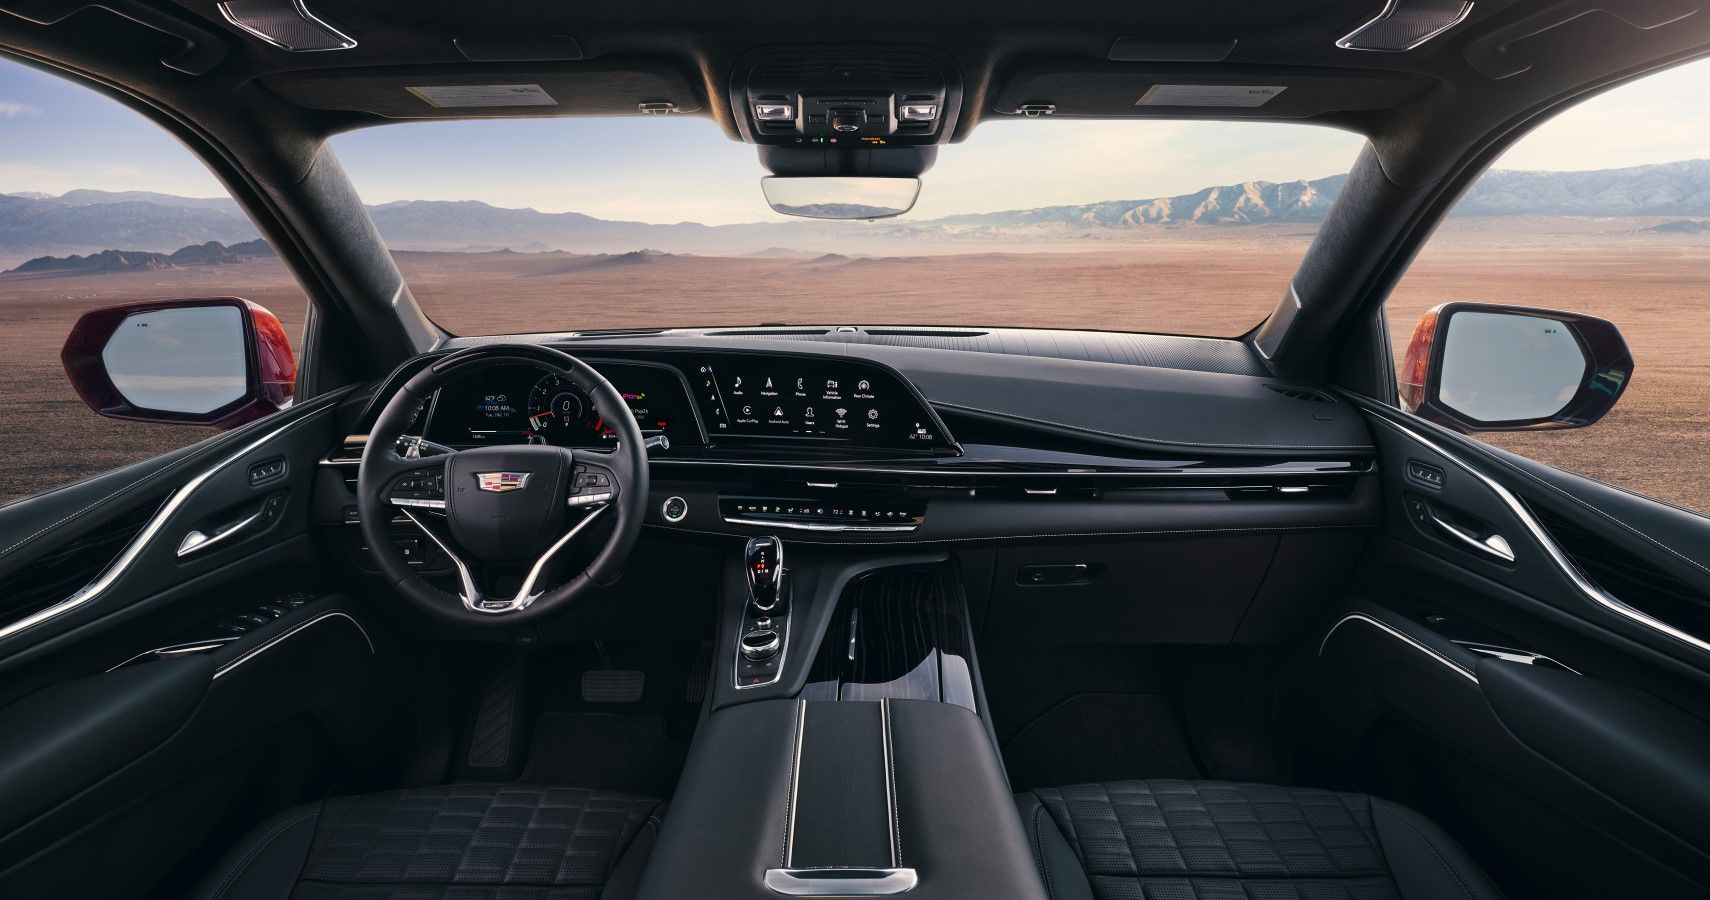 2023 Cadillac Escalade-V interior view of the dashboard